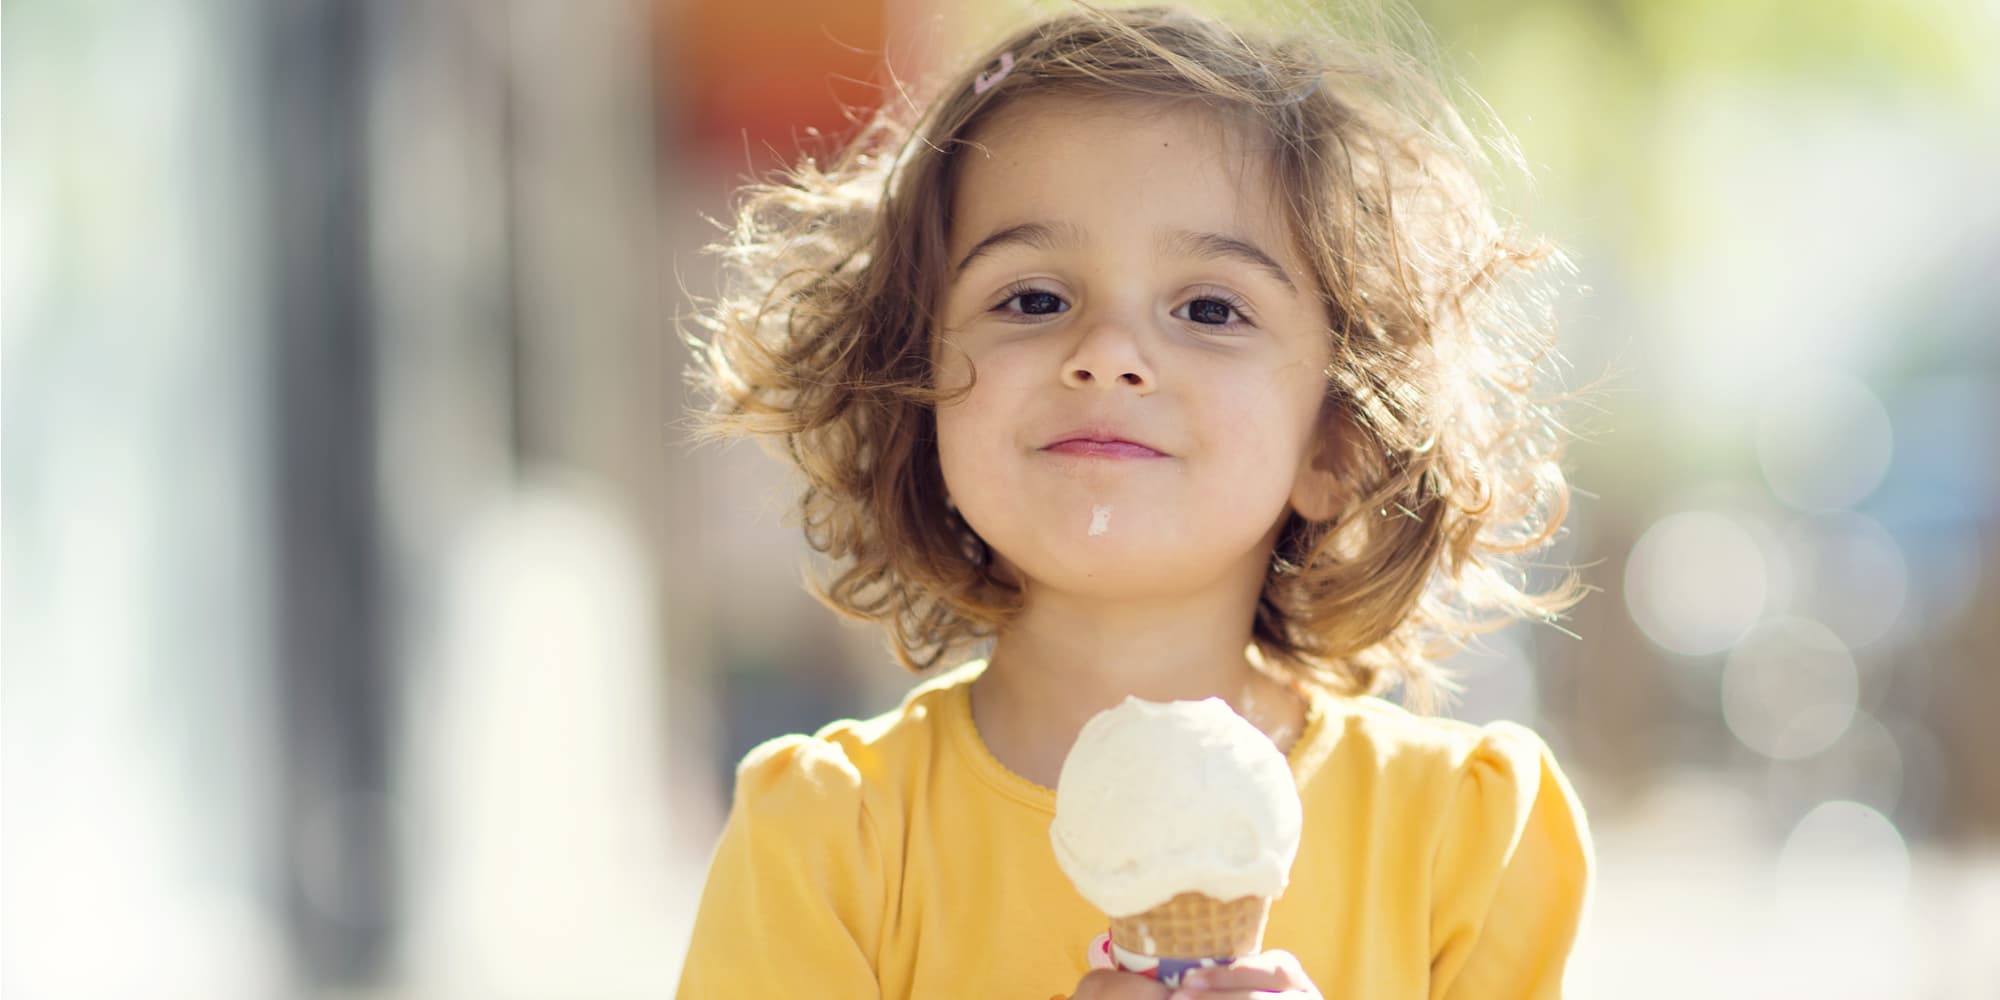 Little girl in yellow shirt eats vanilla ice cream on a cone